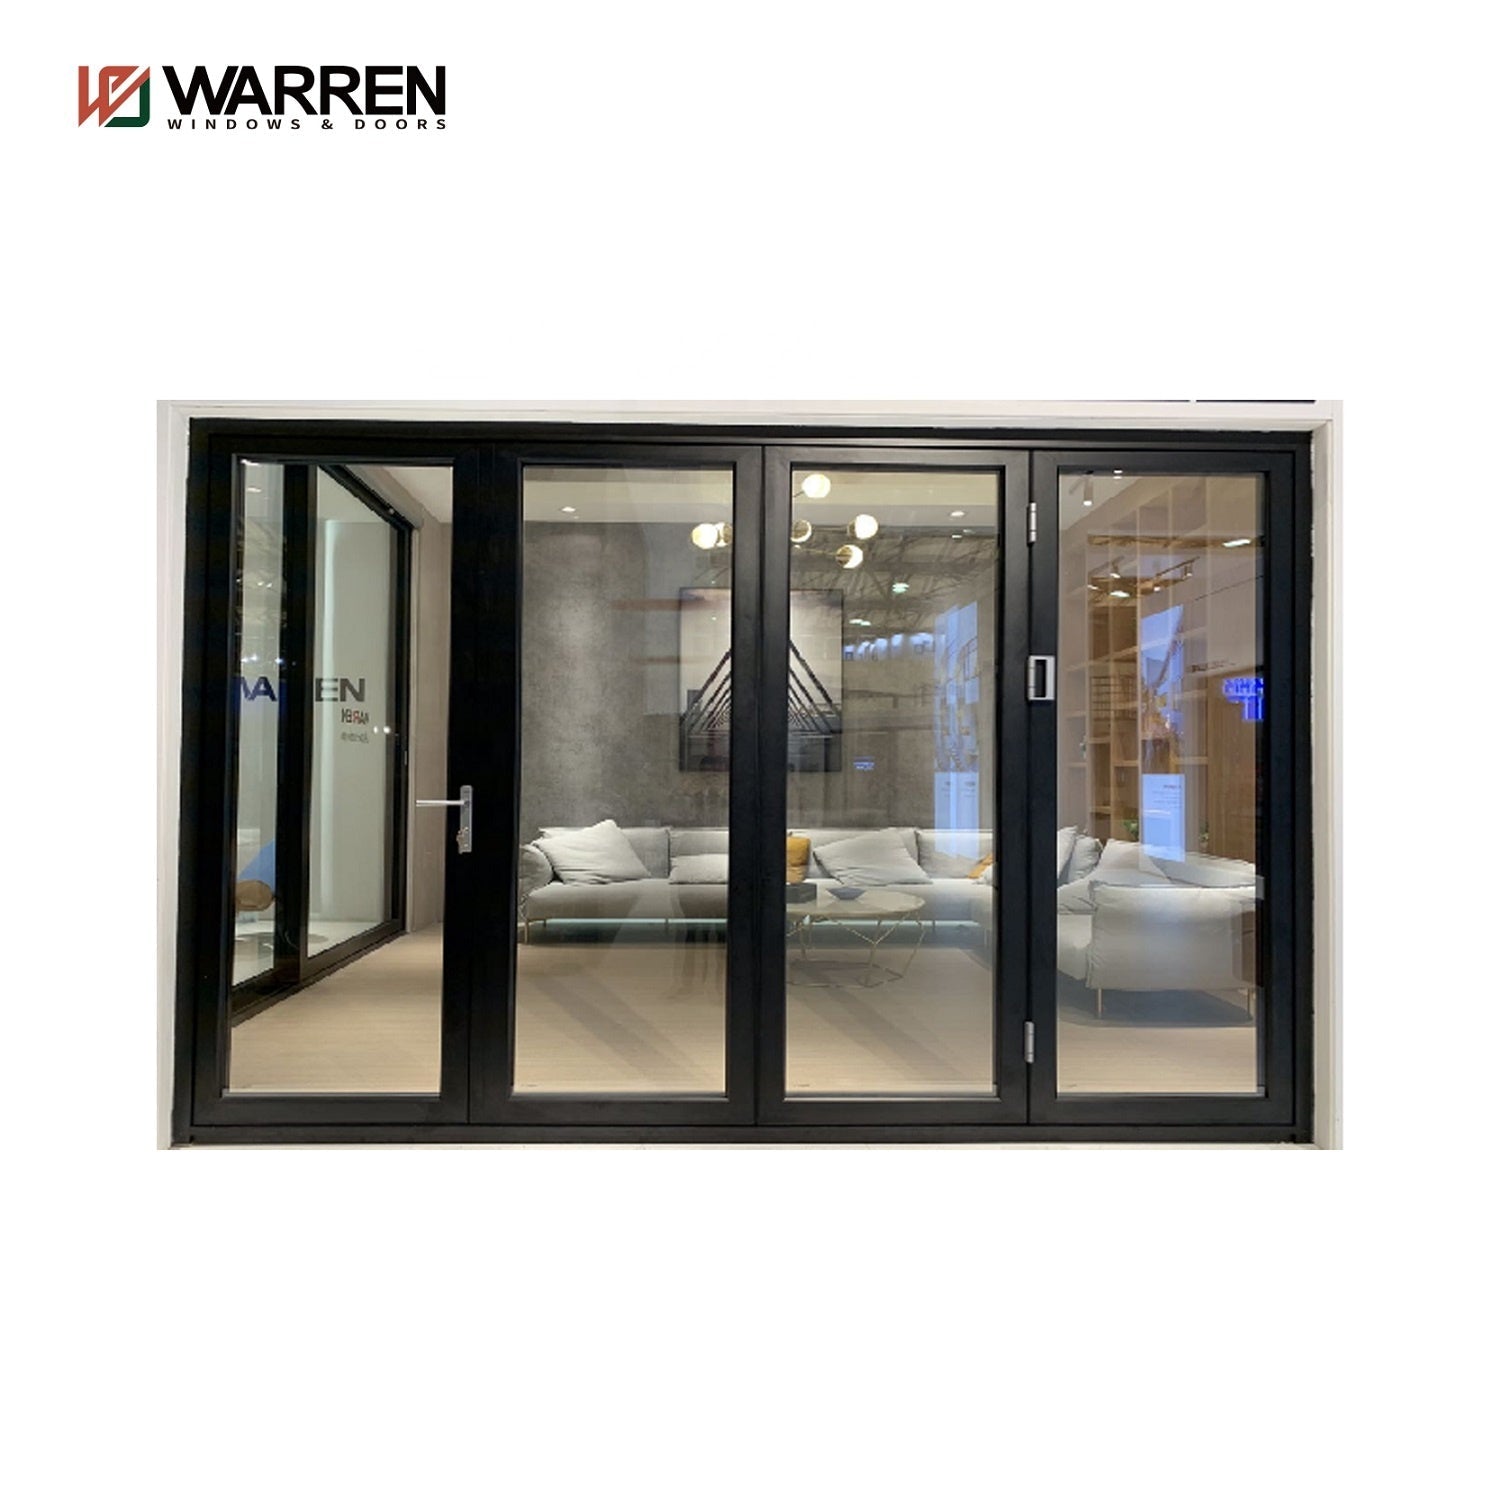 Warren 115x22 folding door black aluminium profile decorative wrought iron window guards